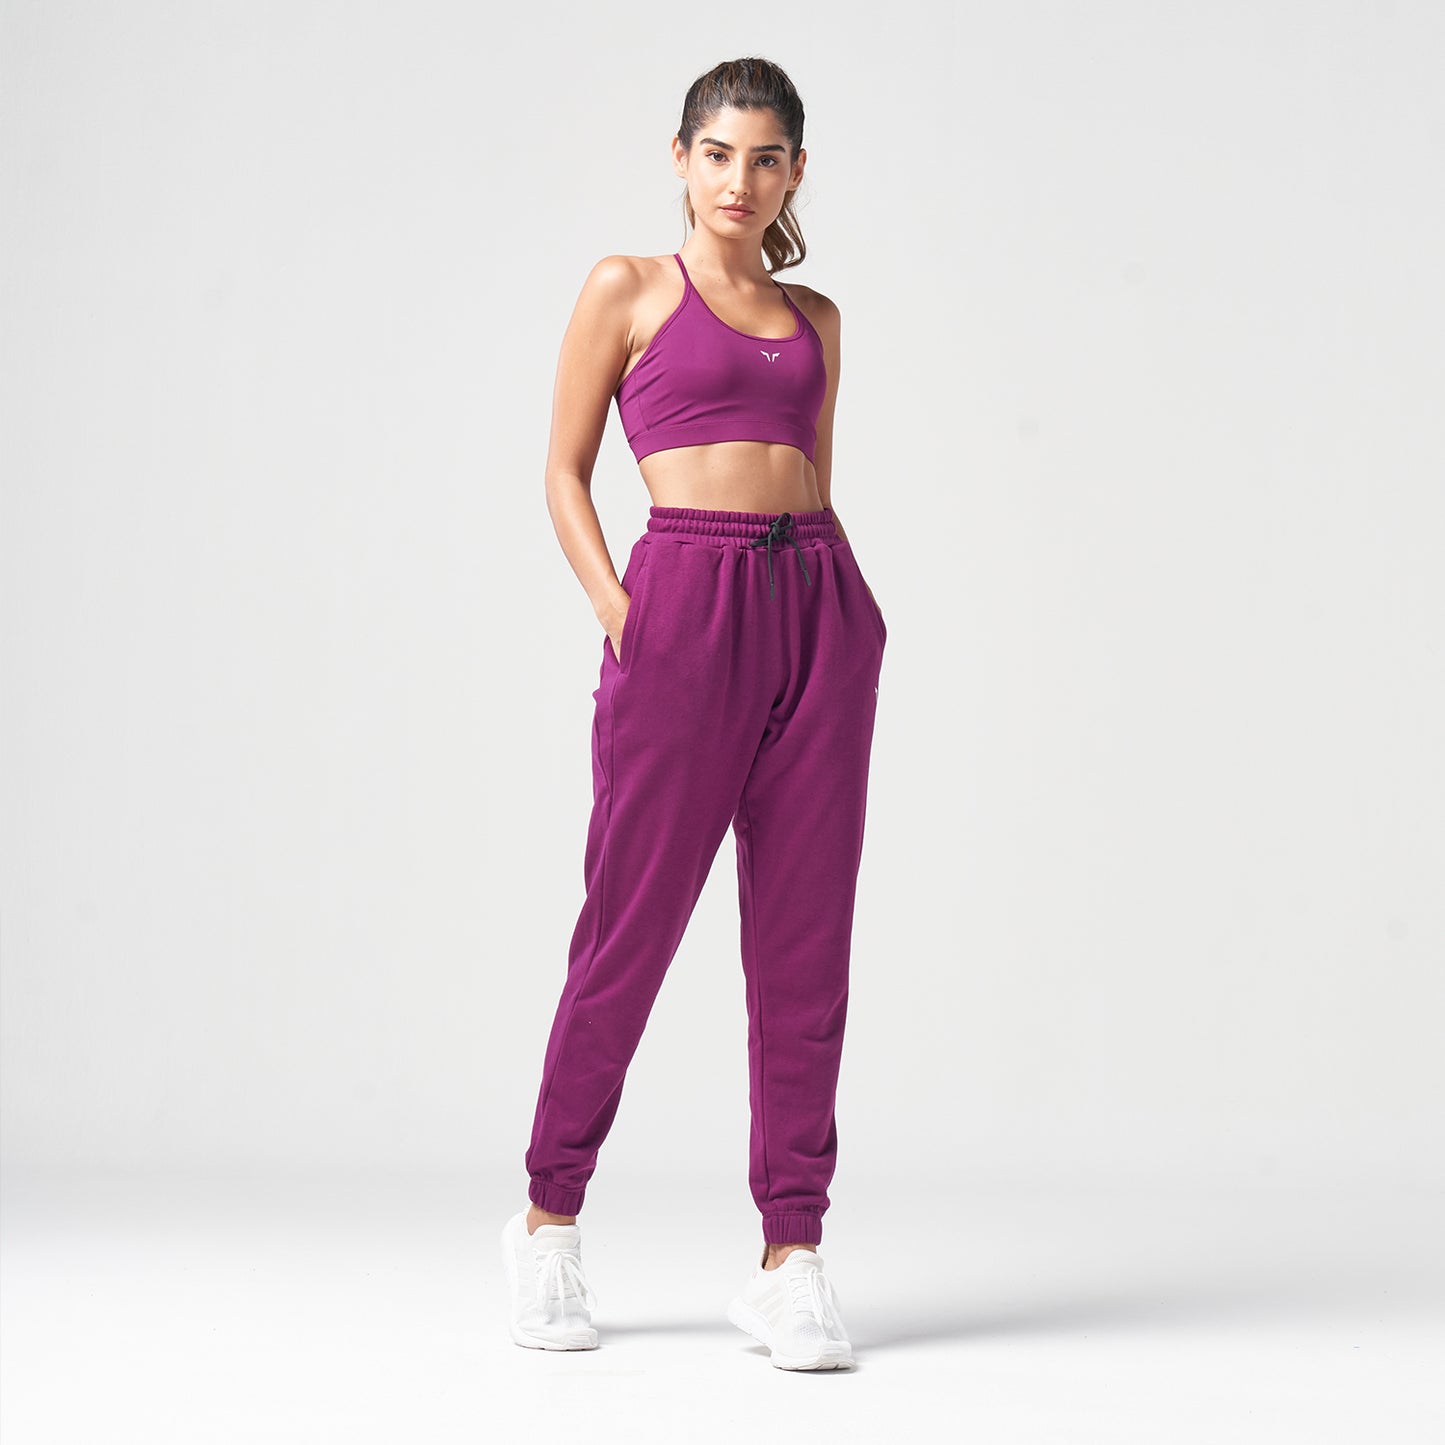 squatwolf-gym-wear-essential-joggers-dark-purple-workout-tee-for-women